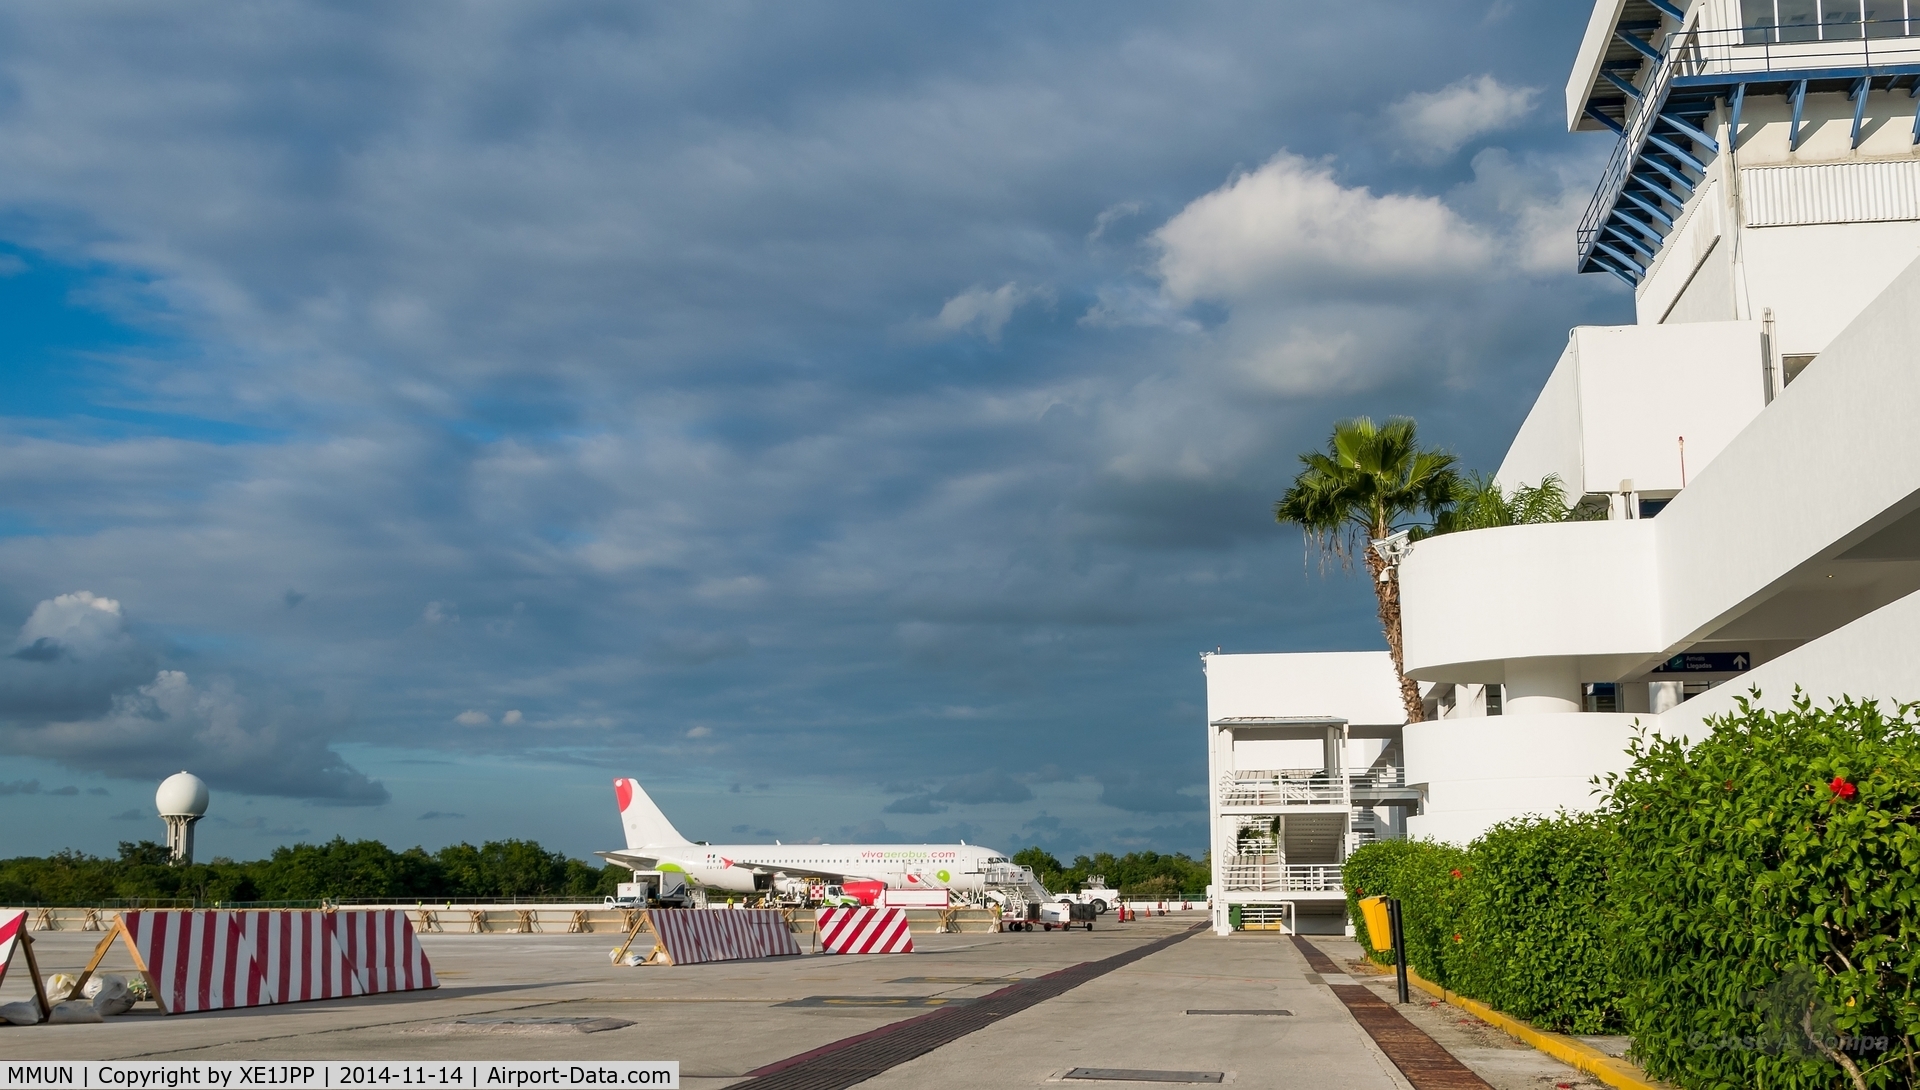 Cancún International Airport, Cancún, Quintana Roo Mexico (MMUN) - Local terminal for Magnicharter & Viva Aerobus.